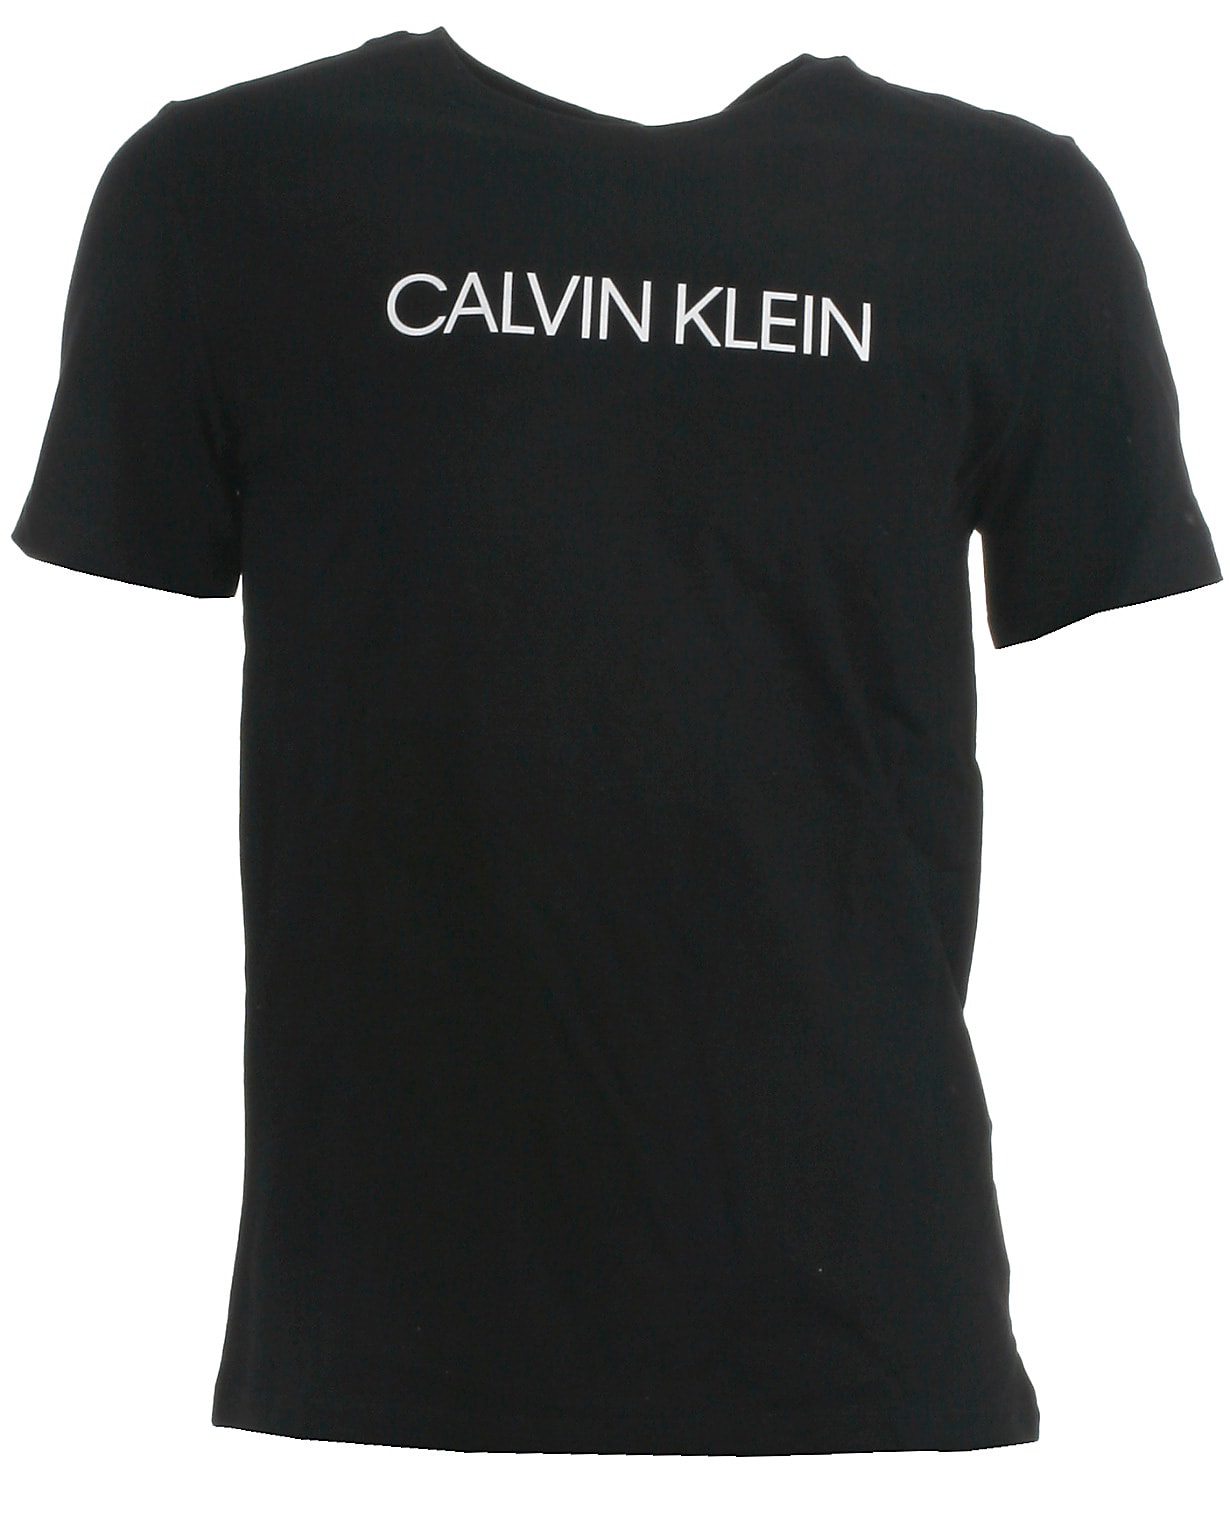 Calvin Klein t-shirt s/s